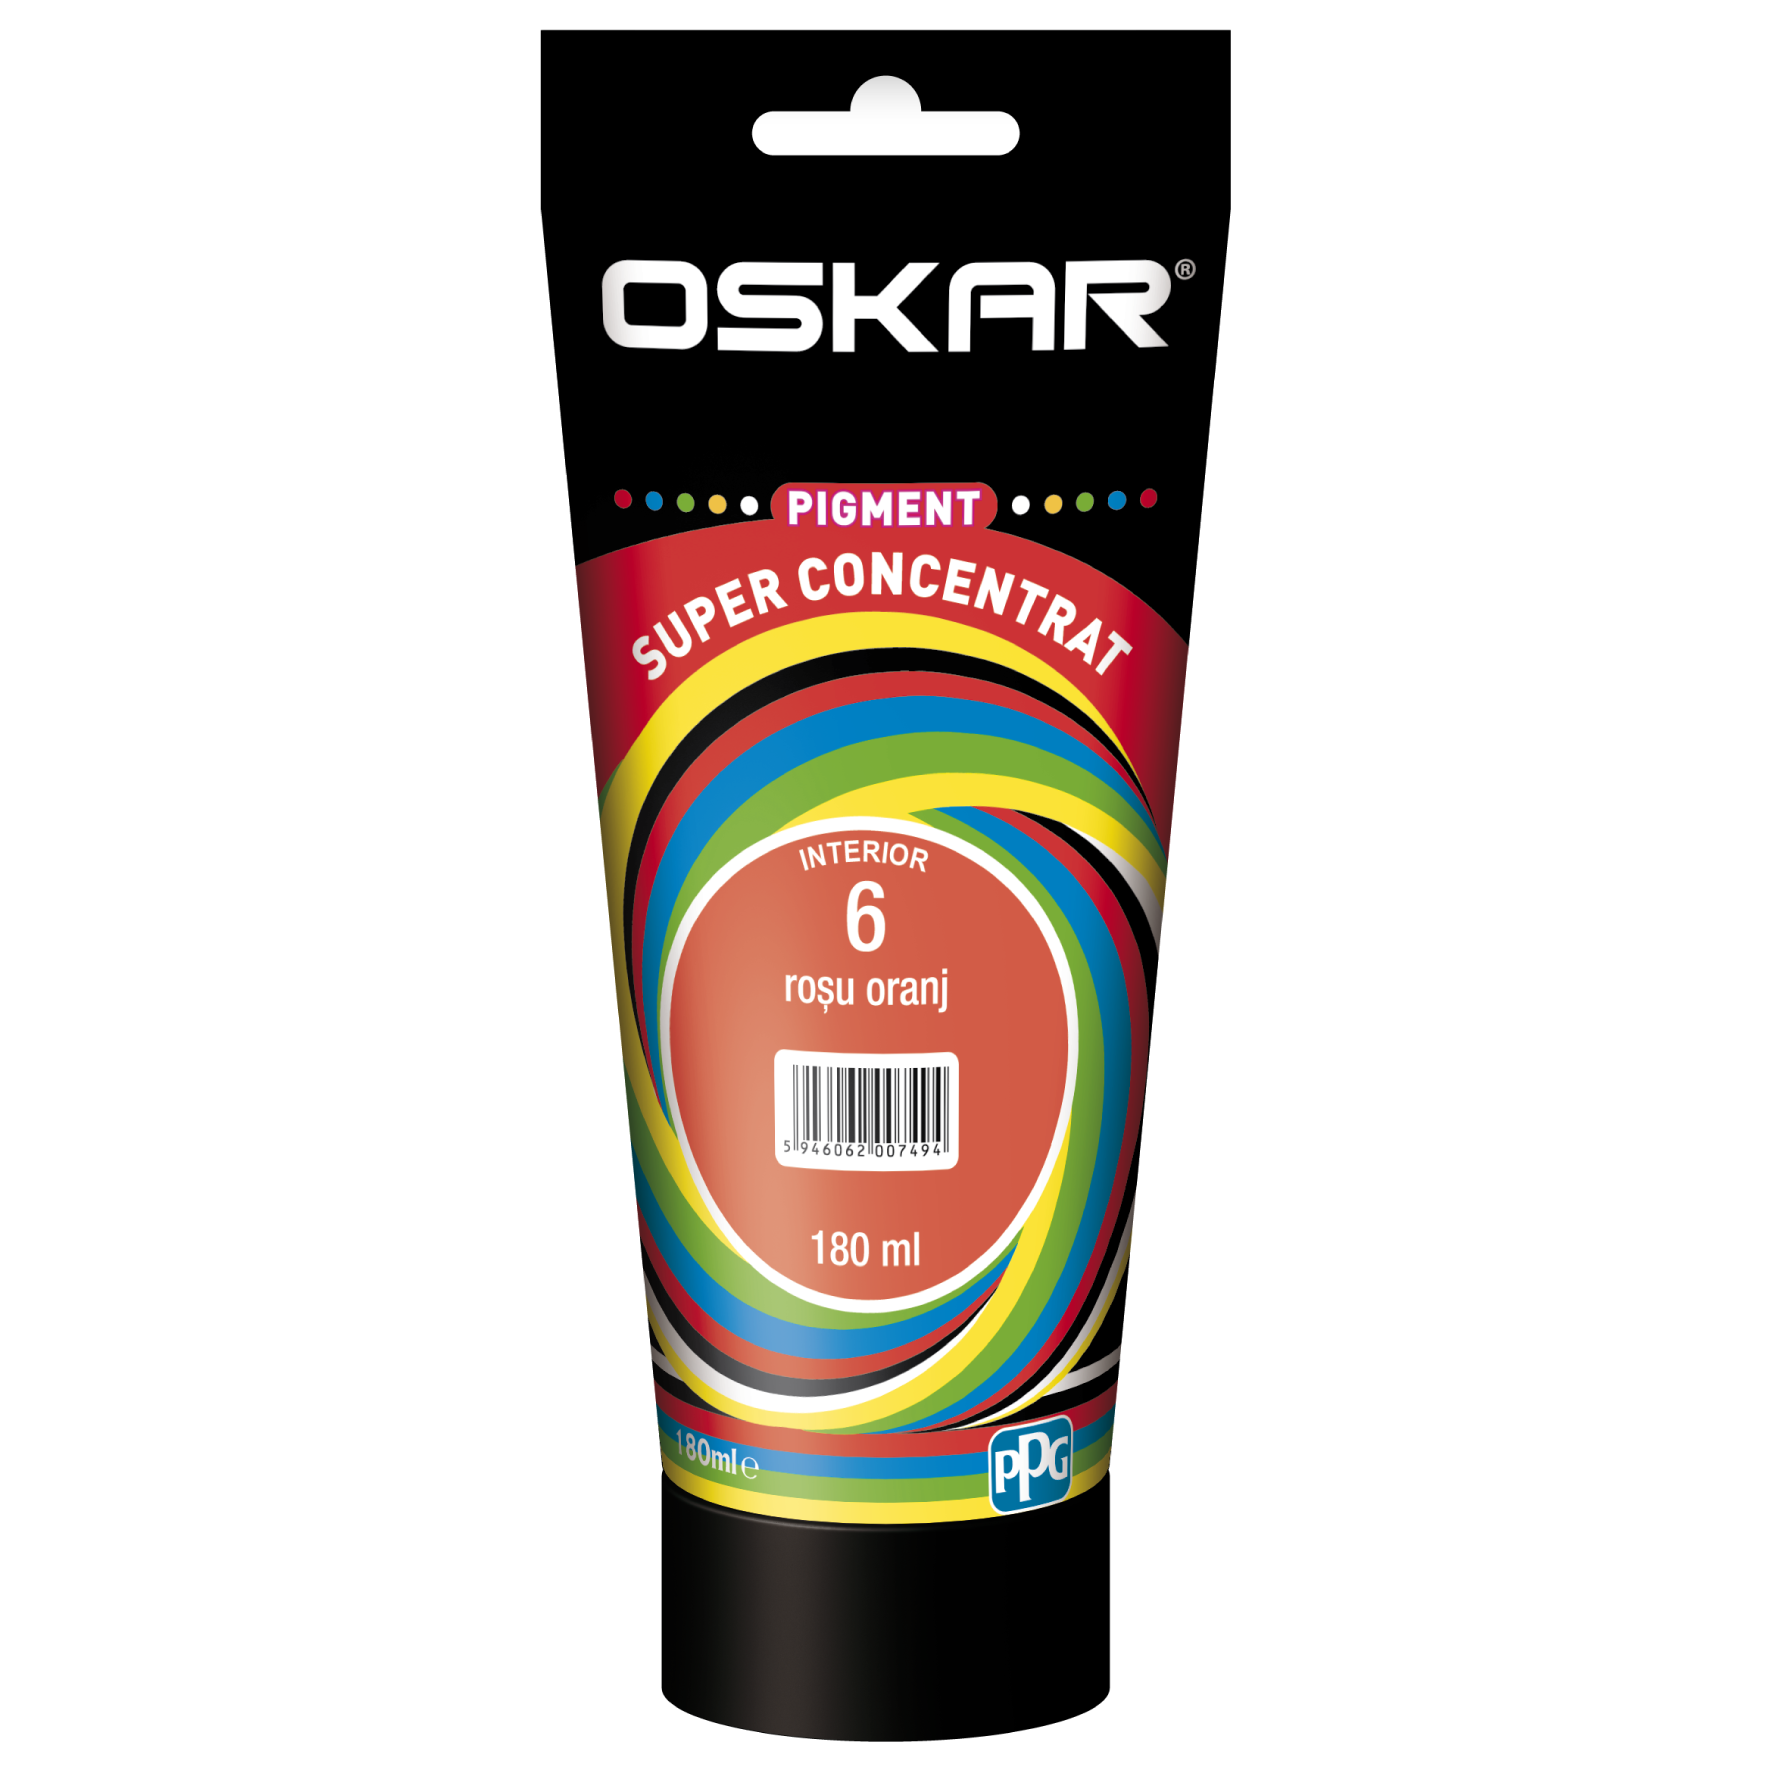 Pigment vopsea lavabila Oskar super concentrat, rosu orange 6, 180 ml 180